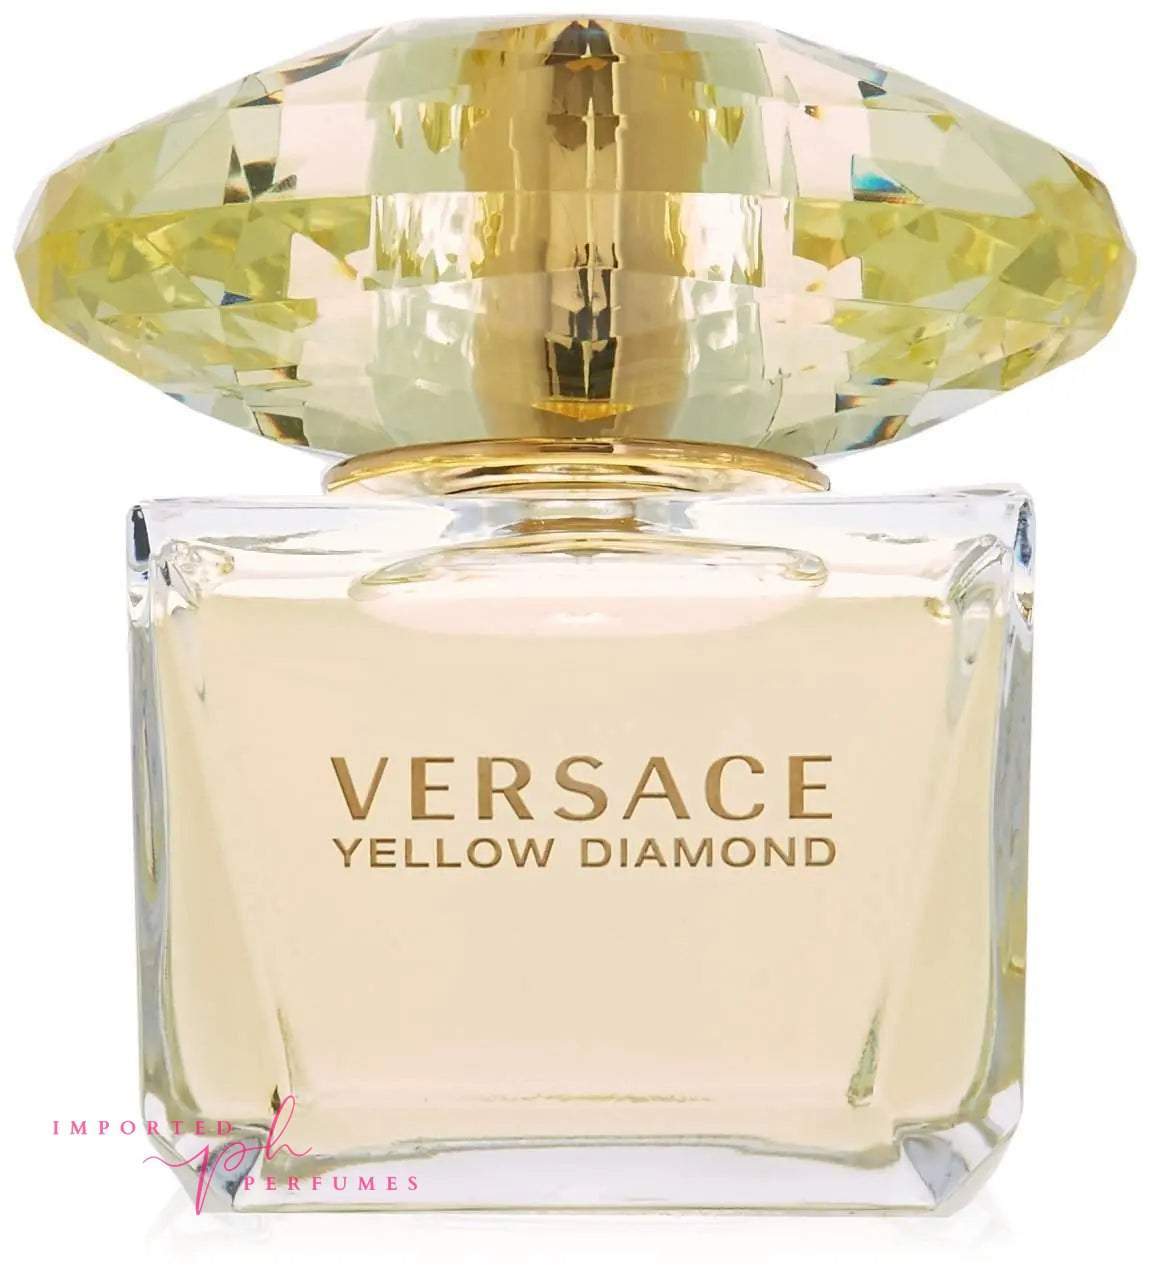 Versace Yellow Diamond For Women Eau de Toilette 90ml-Imported Perfumes Co-for women,Versace,women,yellow diamond